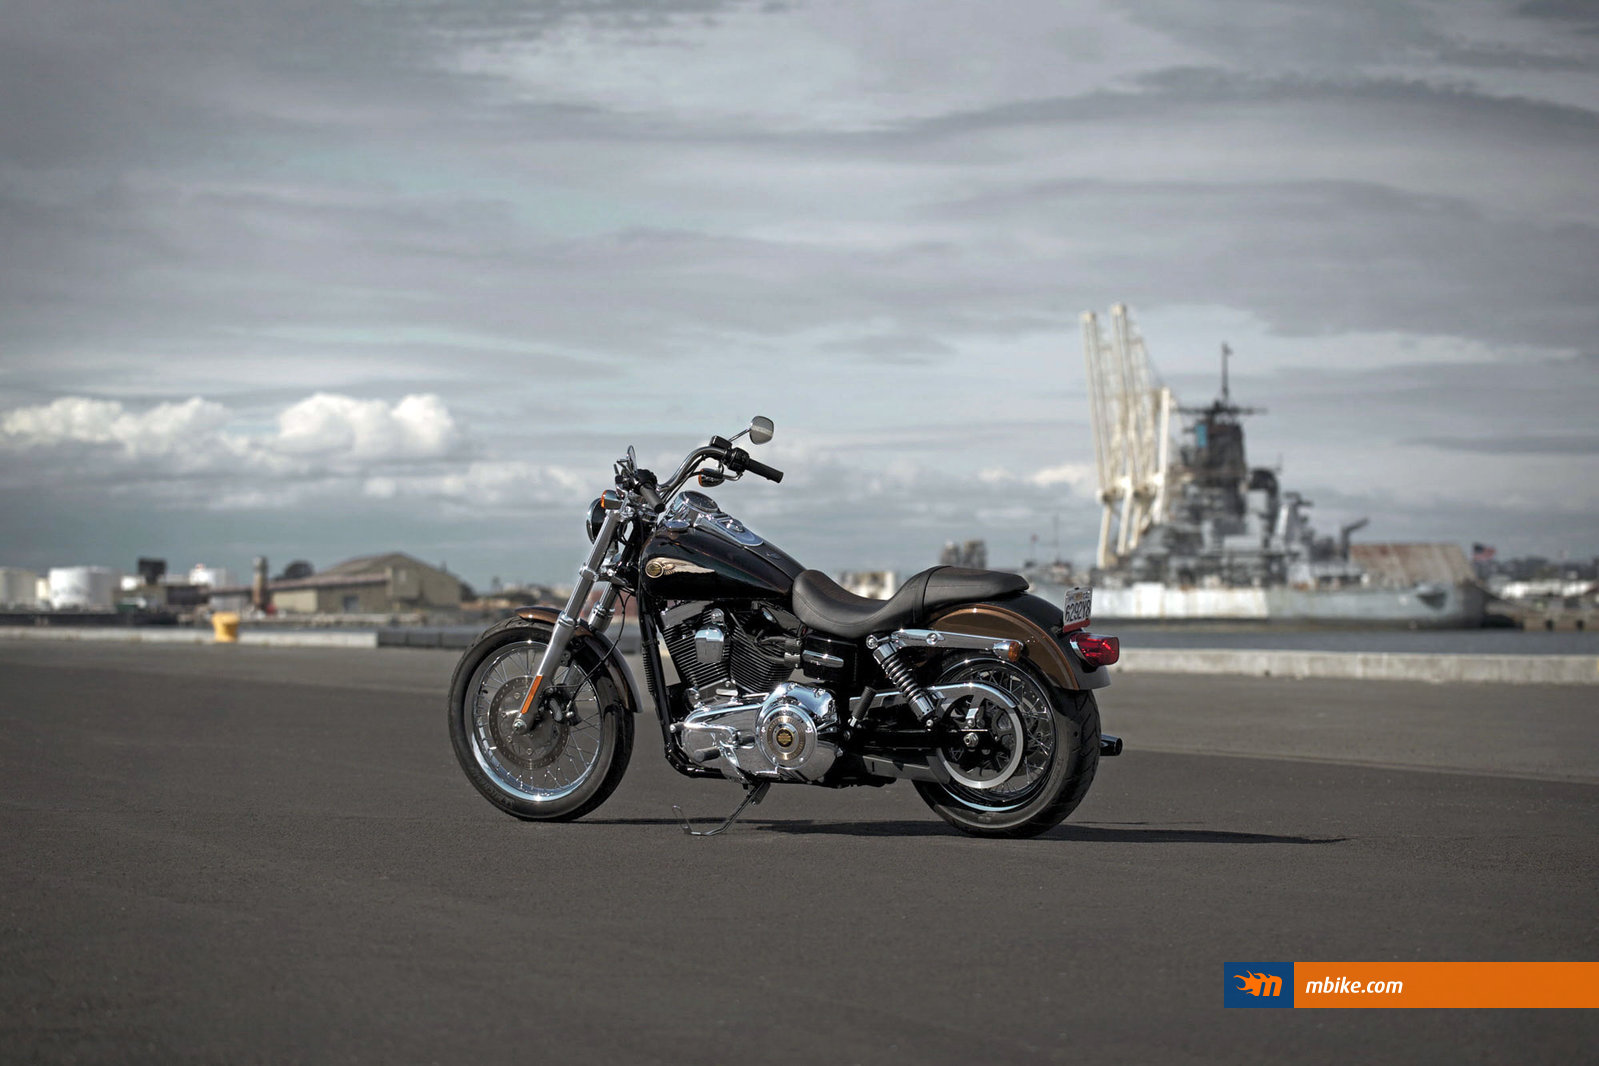 2013 Harley-Davidson FXDC Dyna Super Glide Custom 110th Anniversary